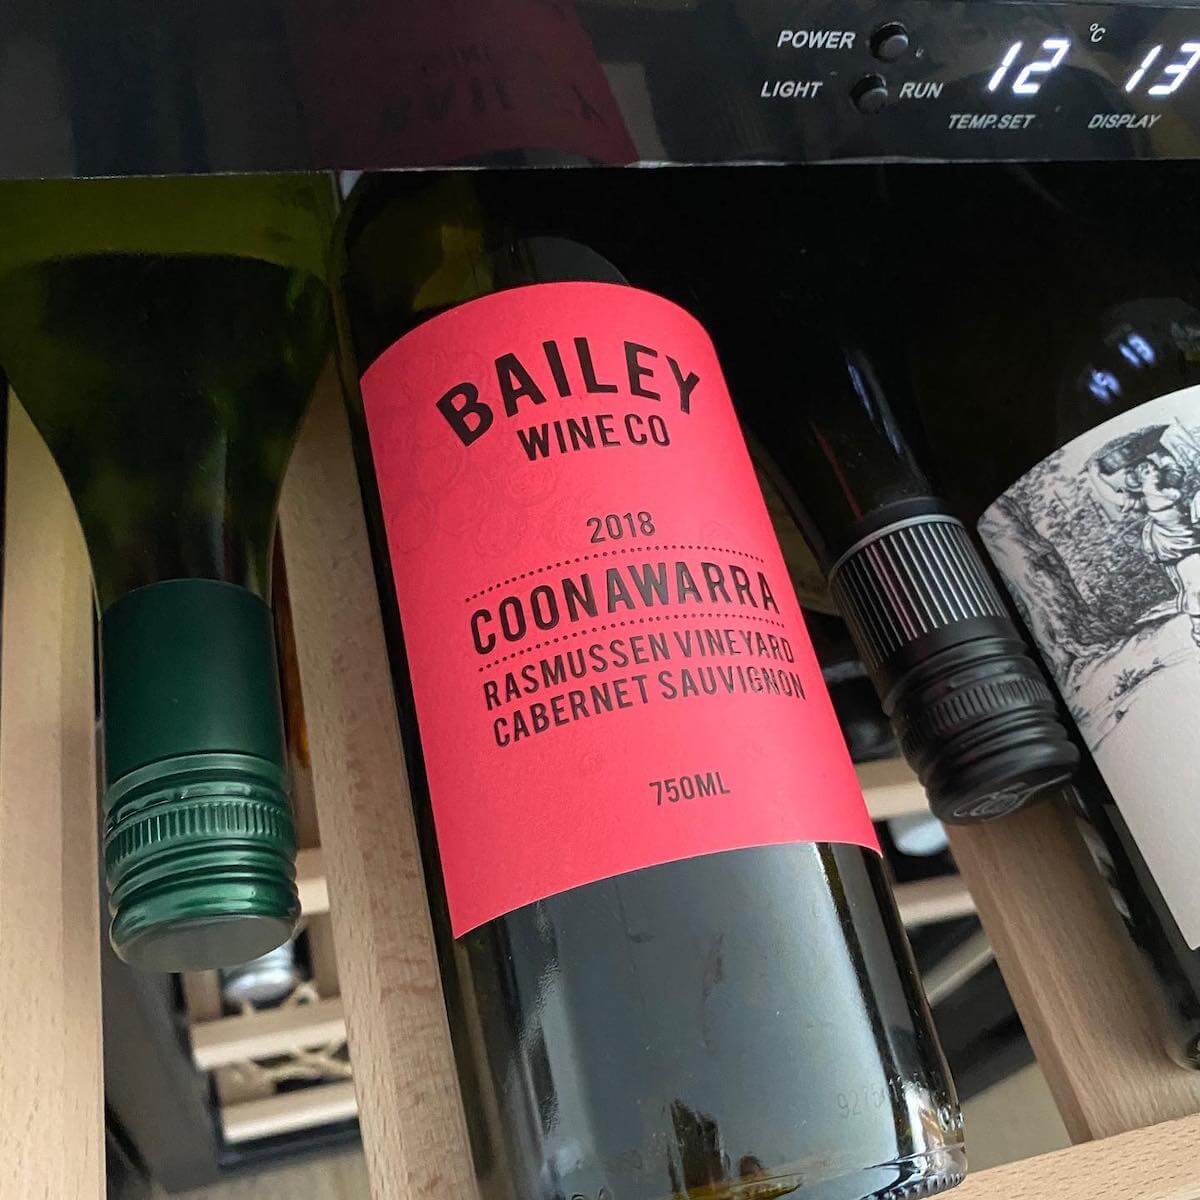 Bailey Wine Co 2018 Coonawarra Cabernet Sauvignon